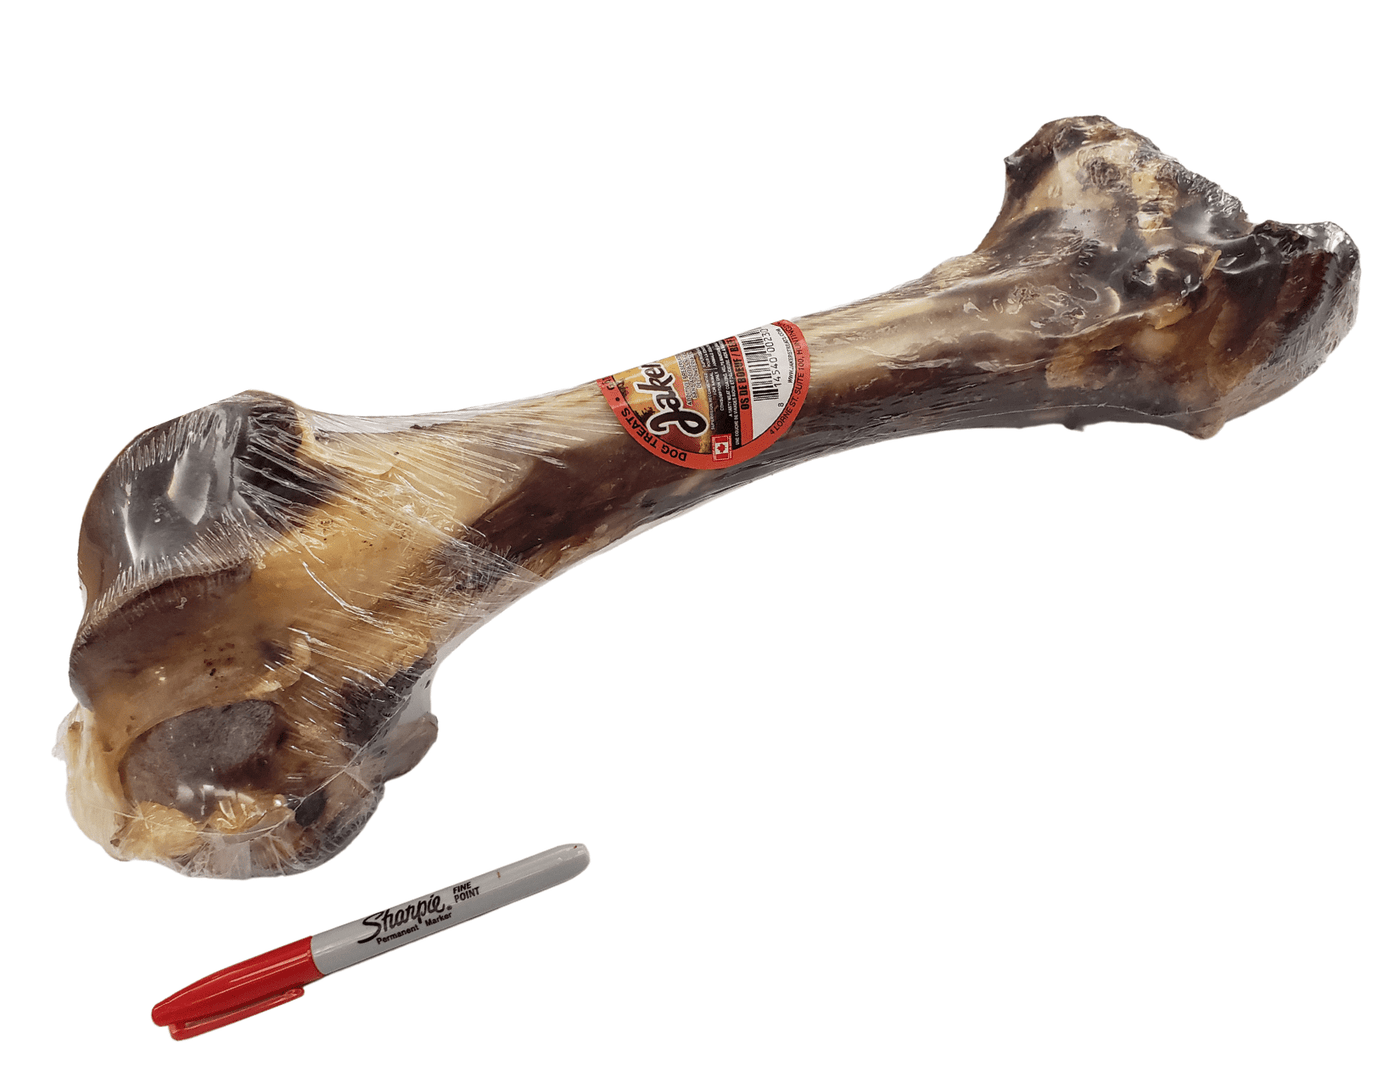 Giant Beef femur bone